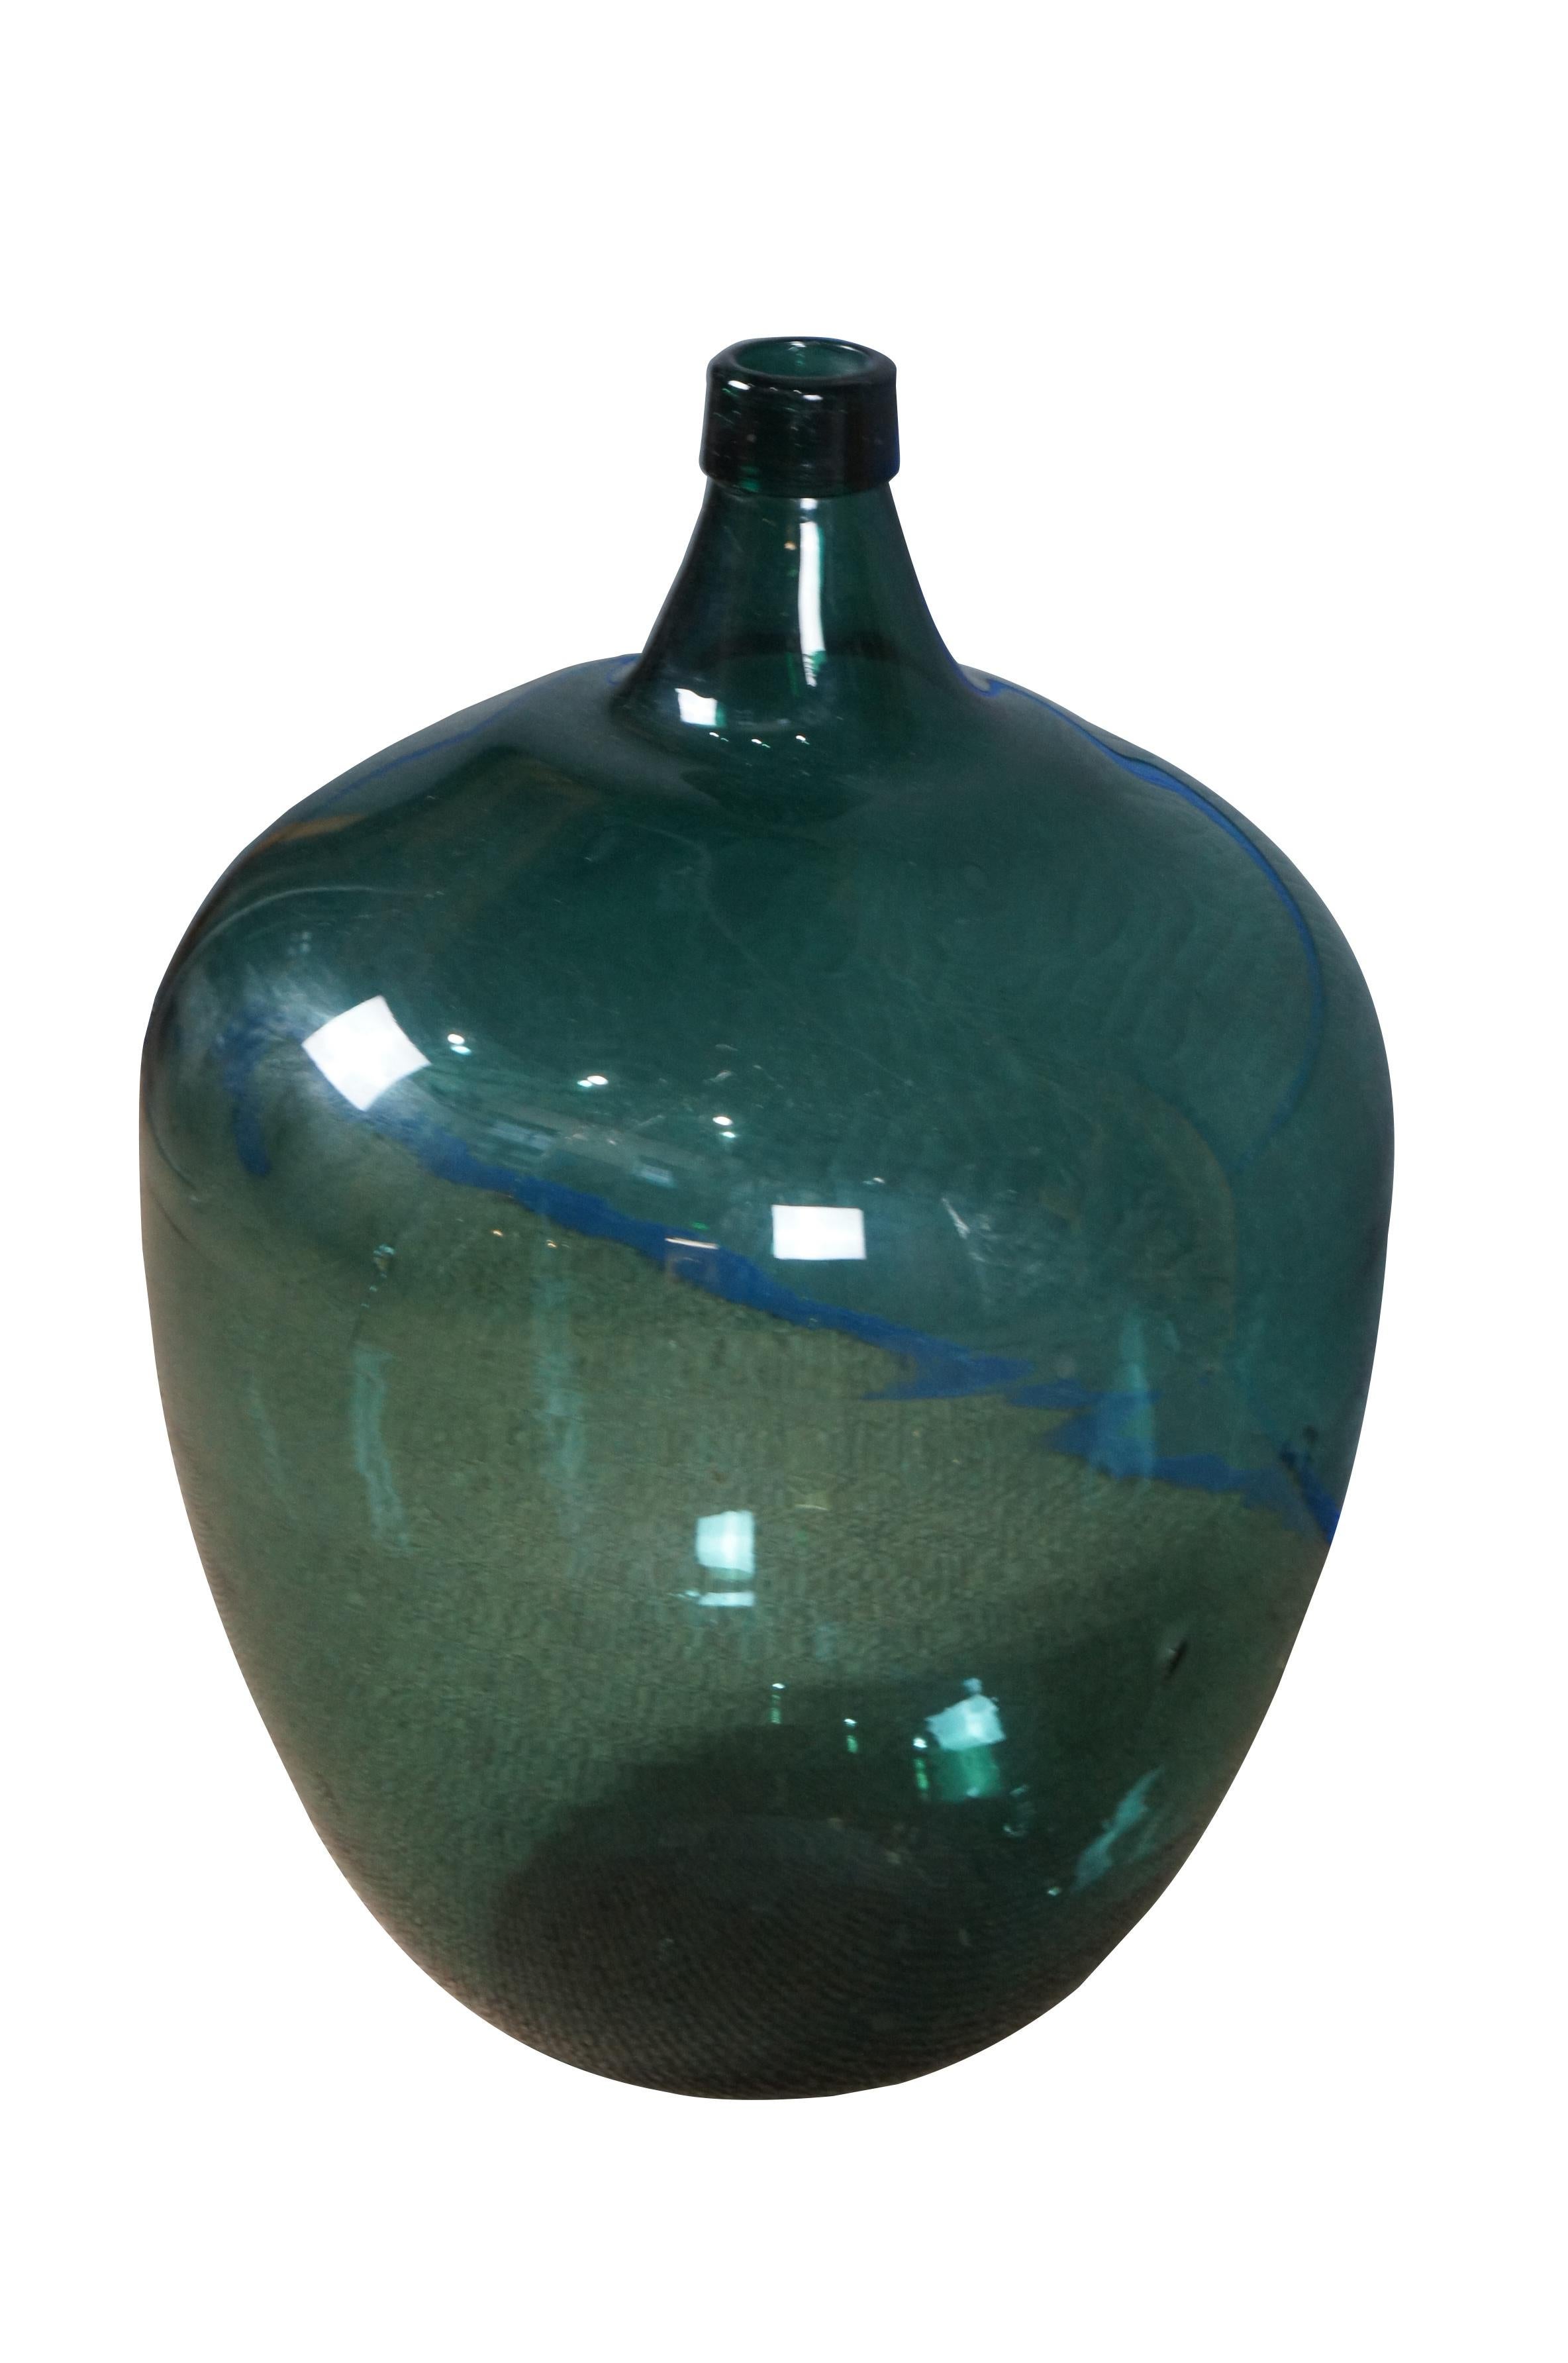 Very large antique hand blown green glass demijohn / bonbonne wine bottle or jug.

Dimensions:
18